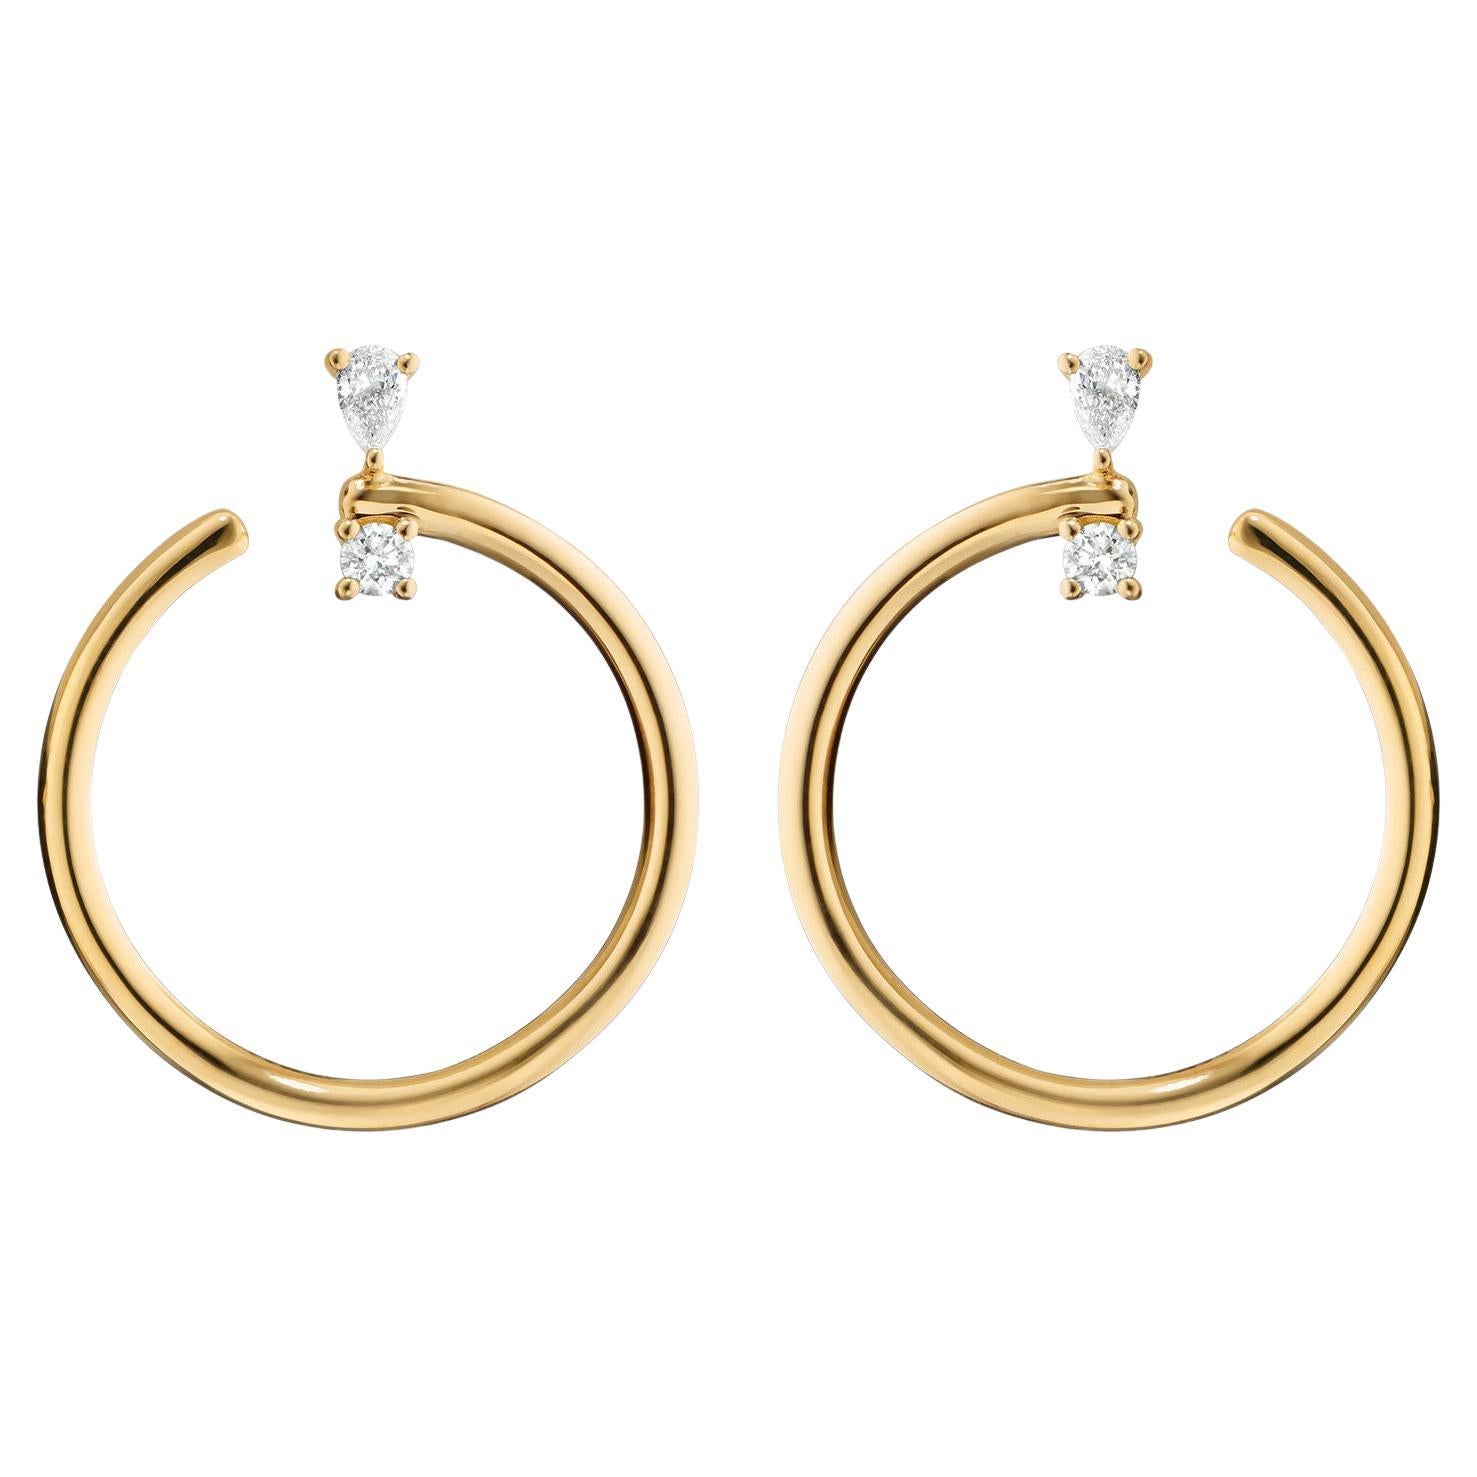 Monica Rich Kosann 18K Gold "Galaxy" Large Hoop Earrings with Diamonds For Sale